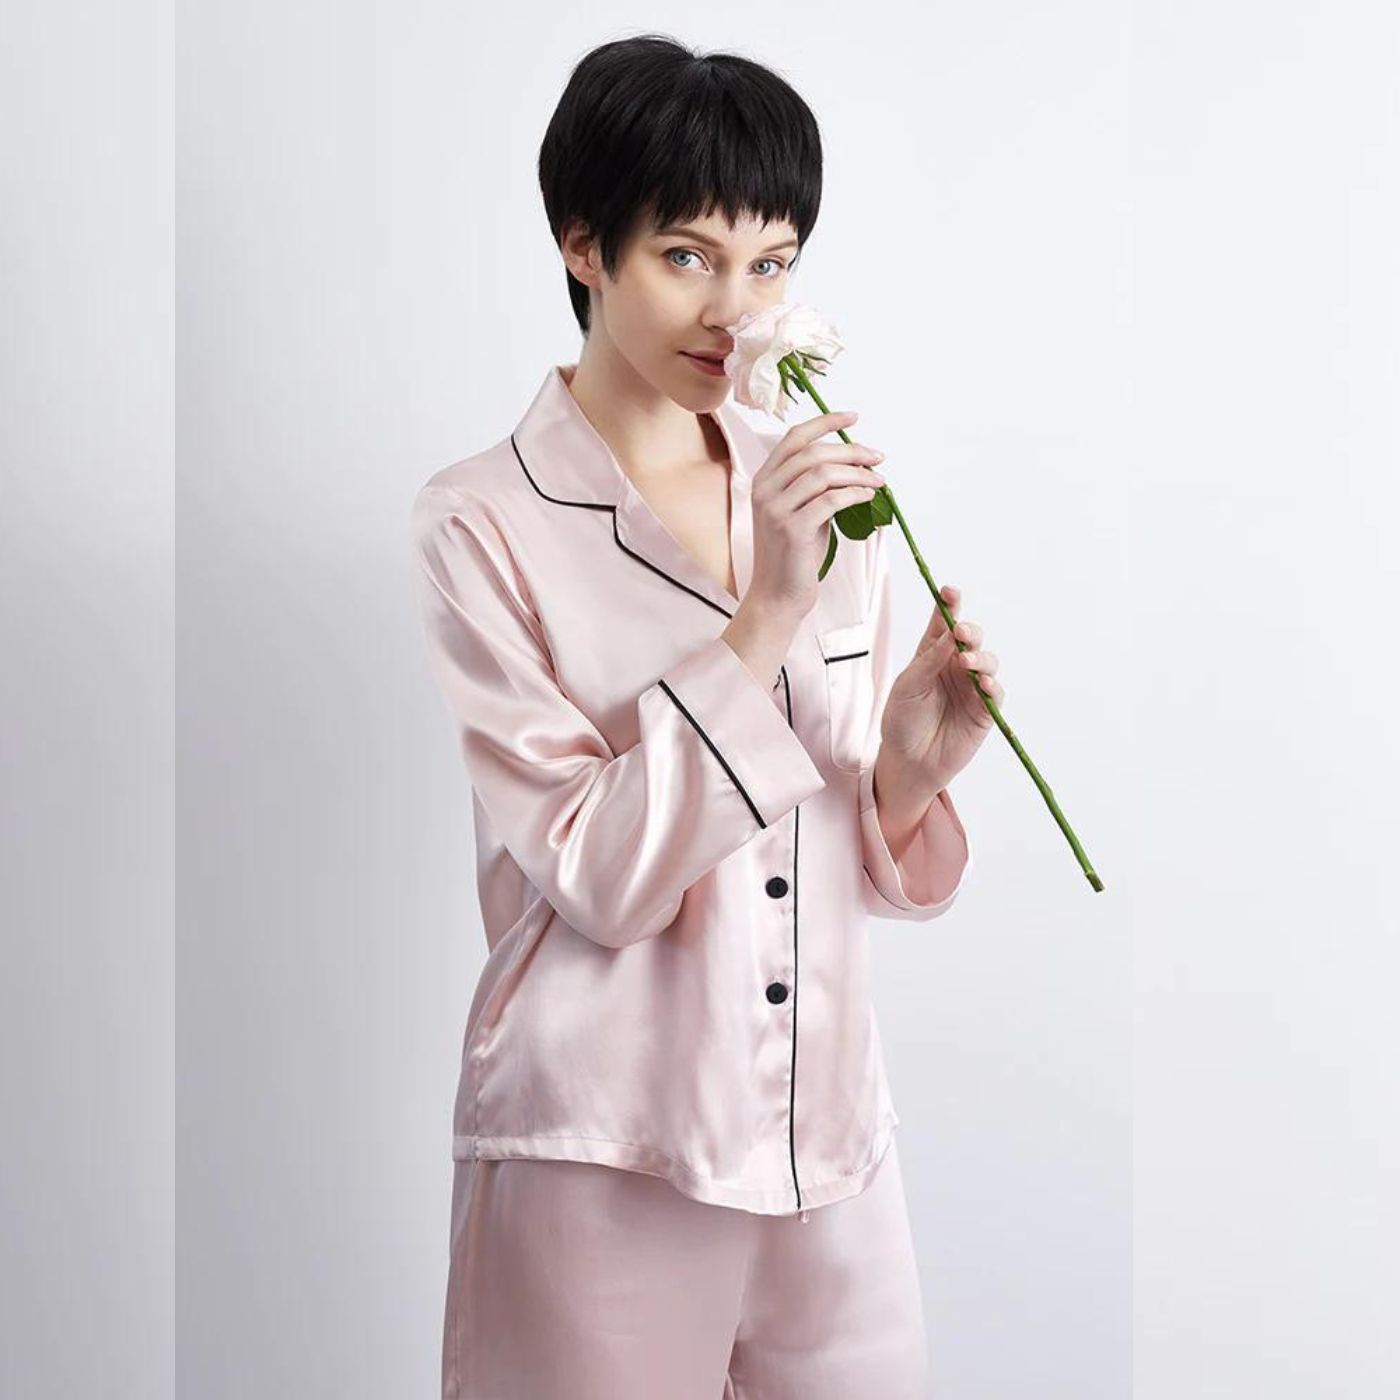 100% Mulberry Silk Real Pure Full Length Pyjamas Pajamas Set trousers shirt two pieces for Women 22 Momme MM Luxury nightwear sleepwear ladies light pink